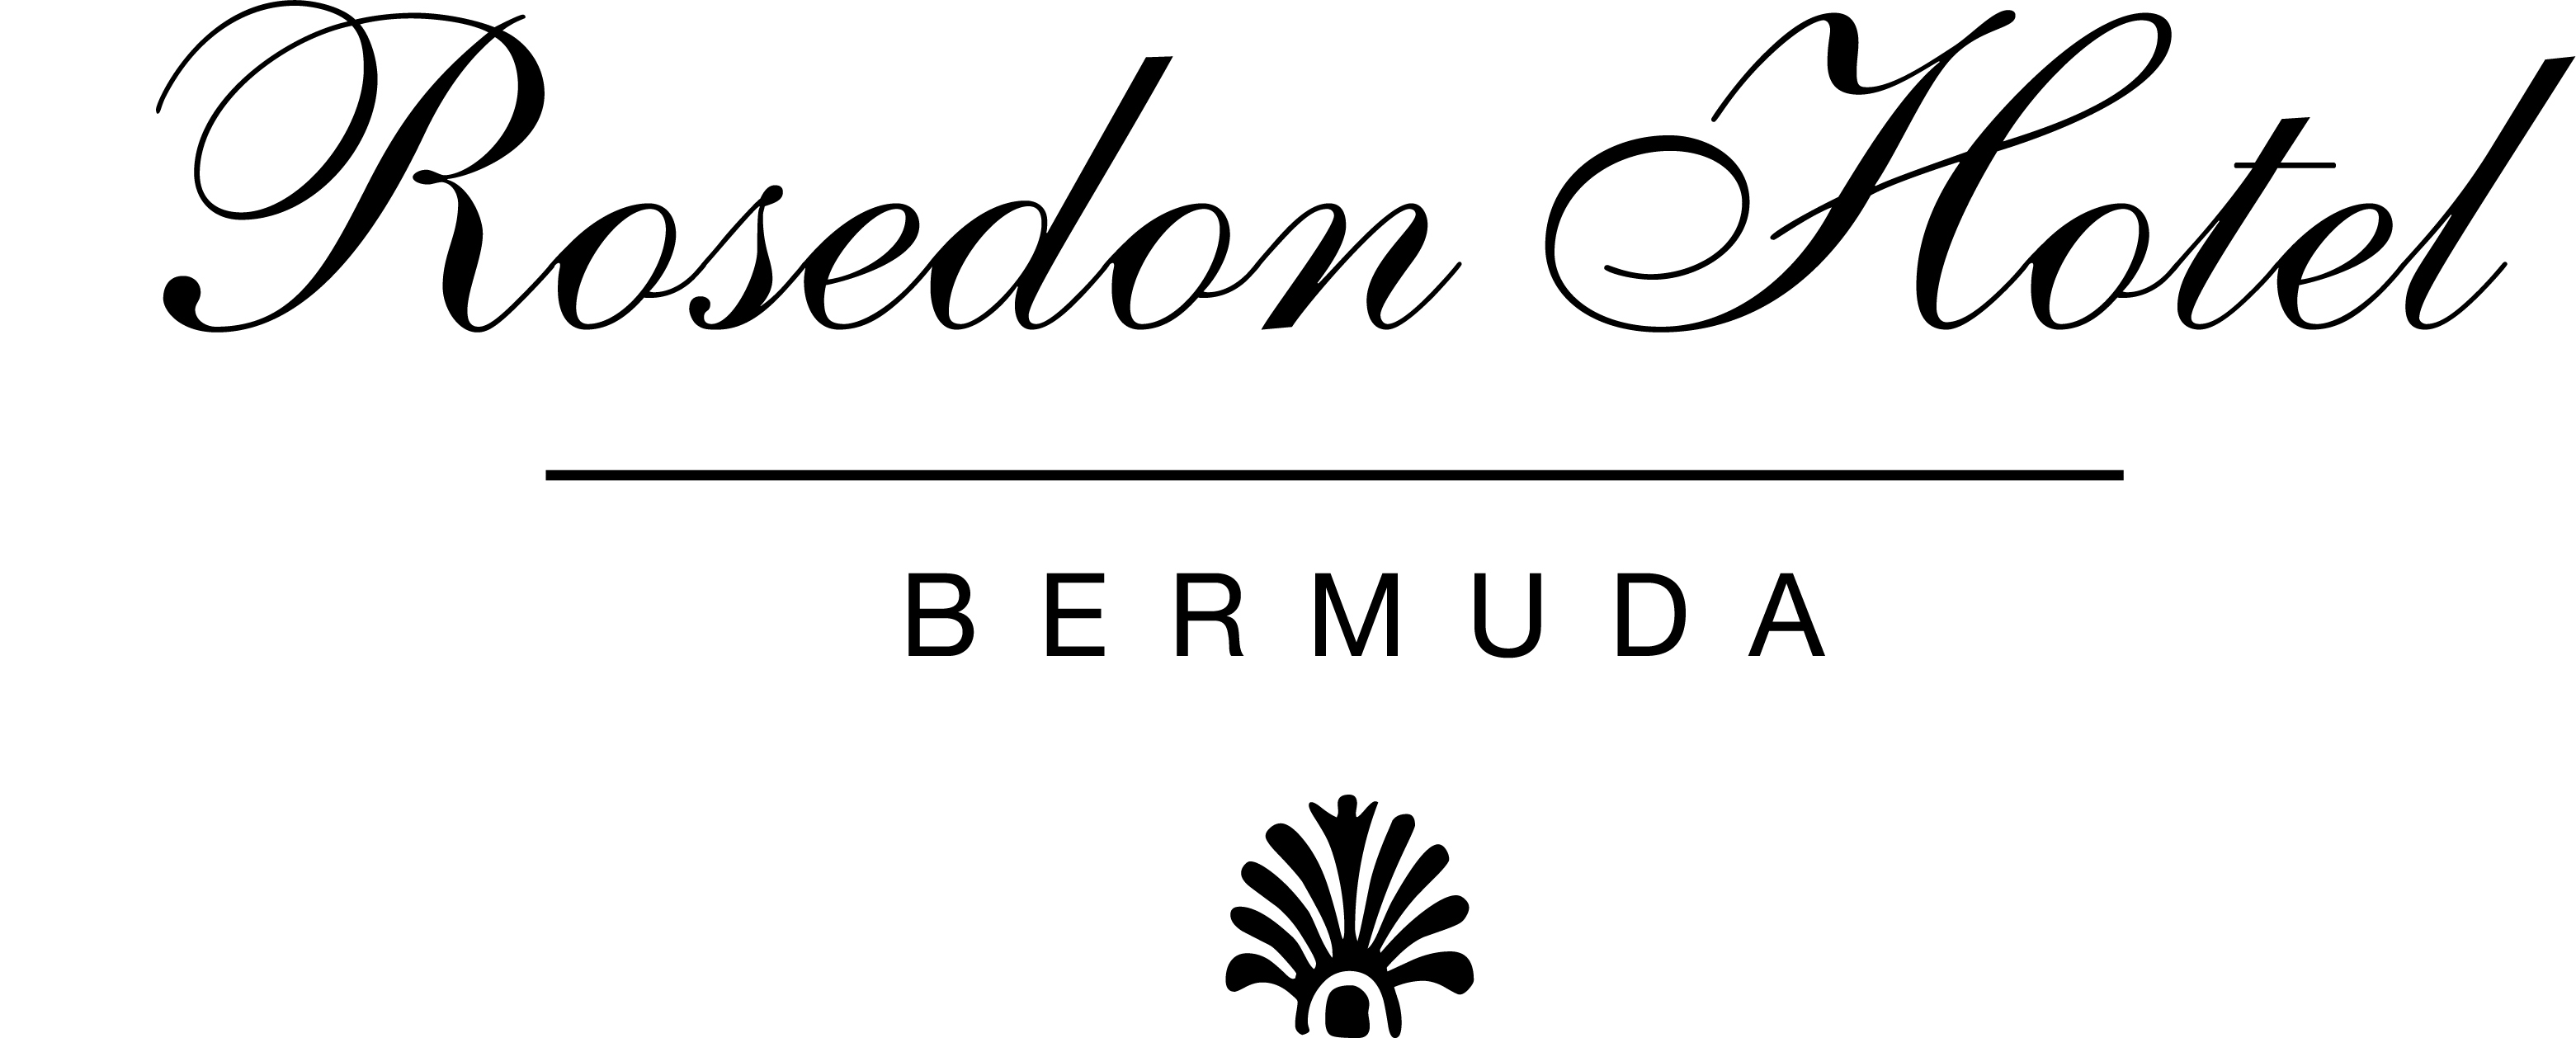 Rosedon Hotel Bermuda logo